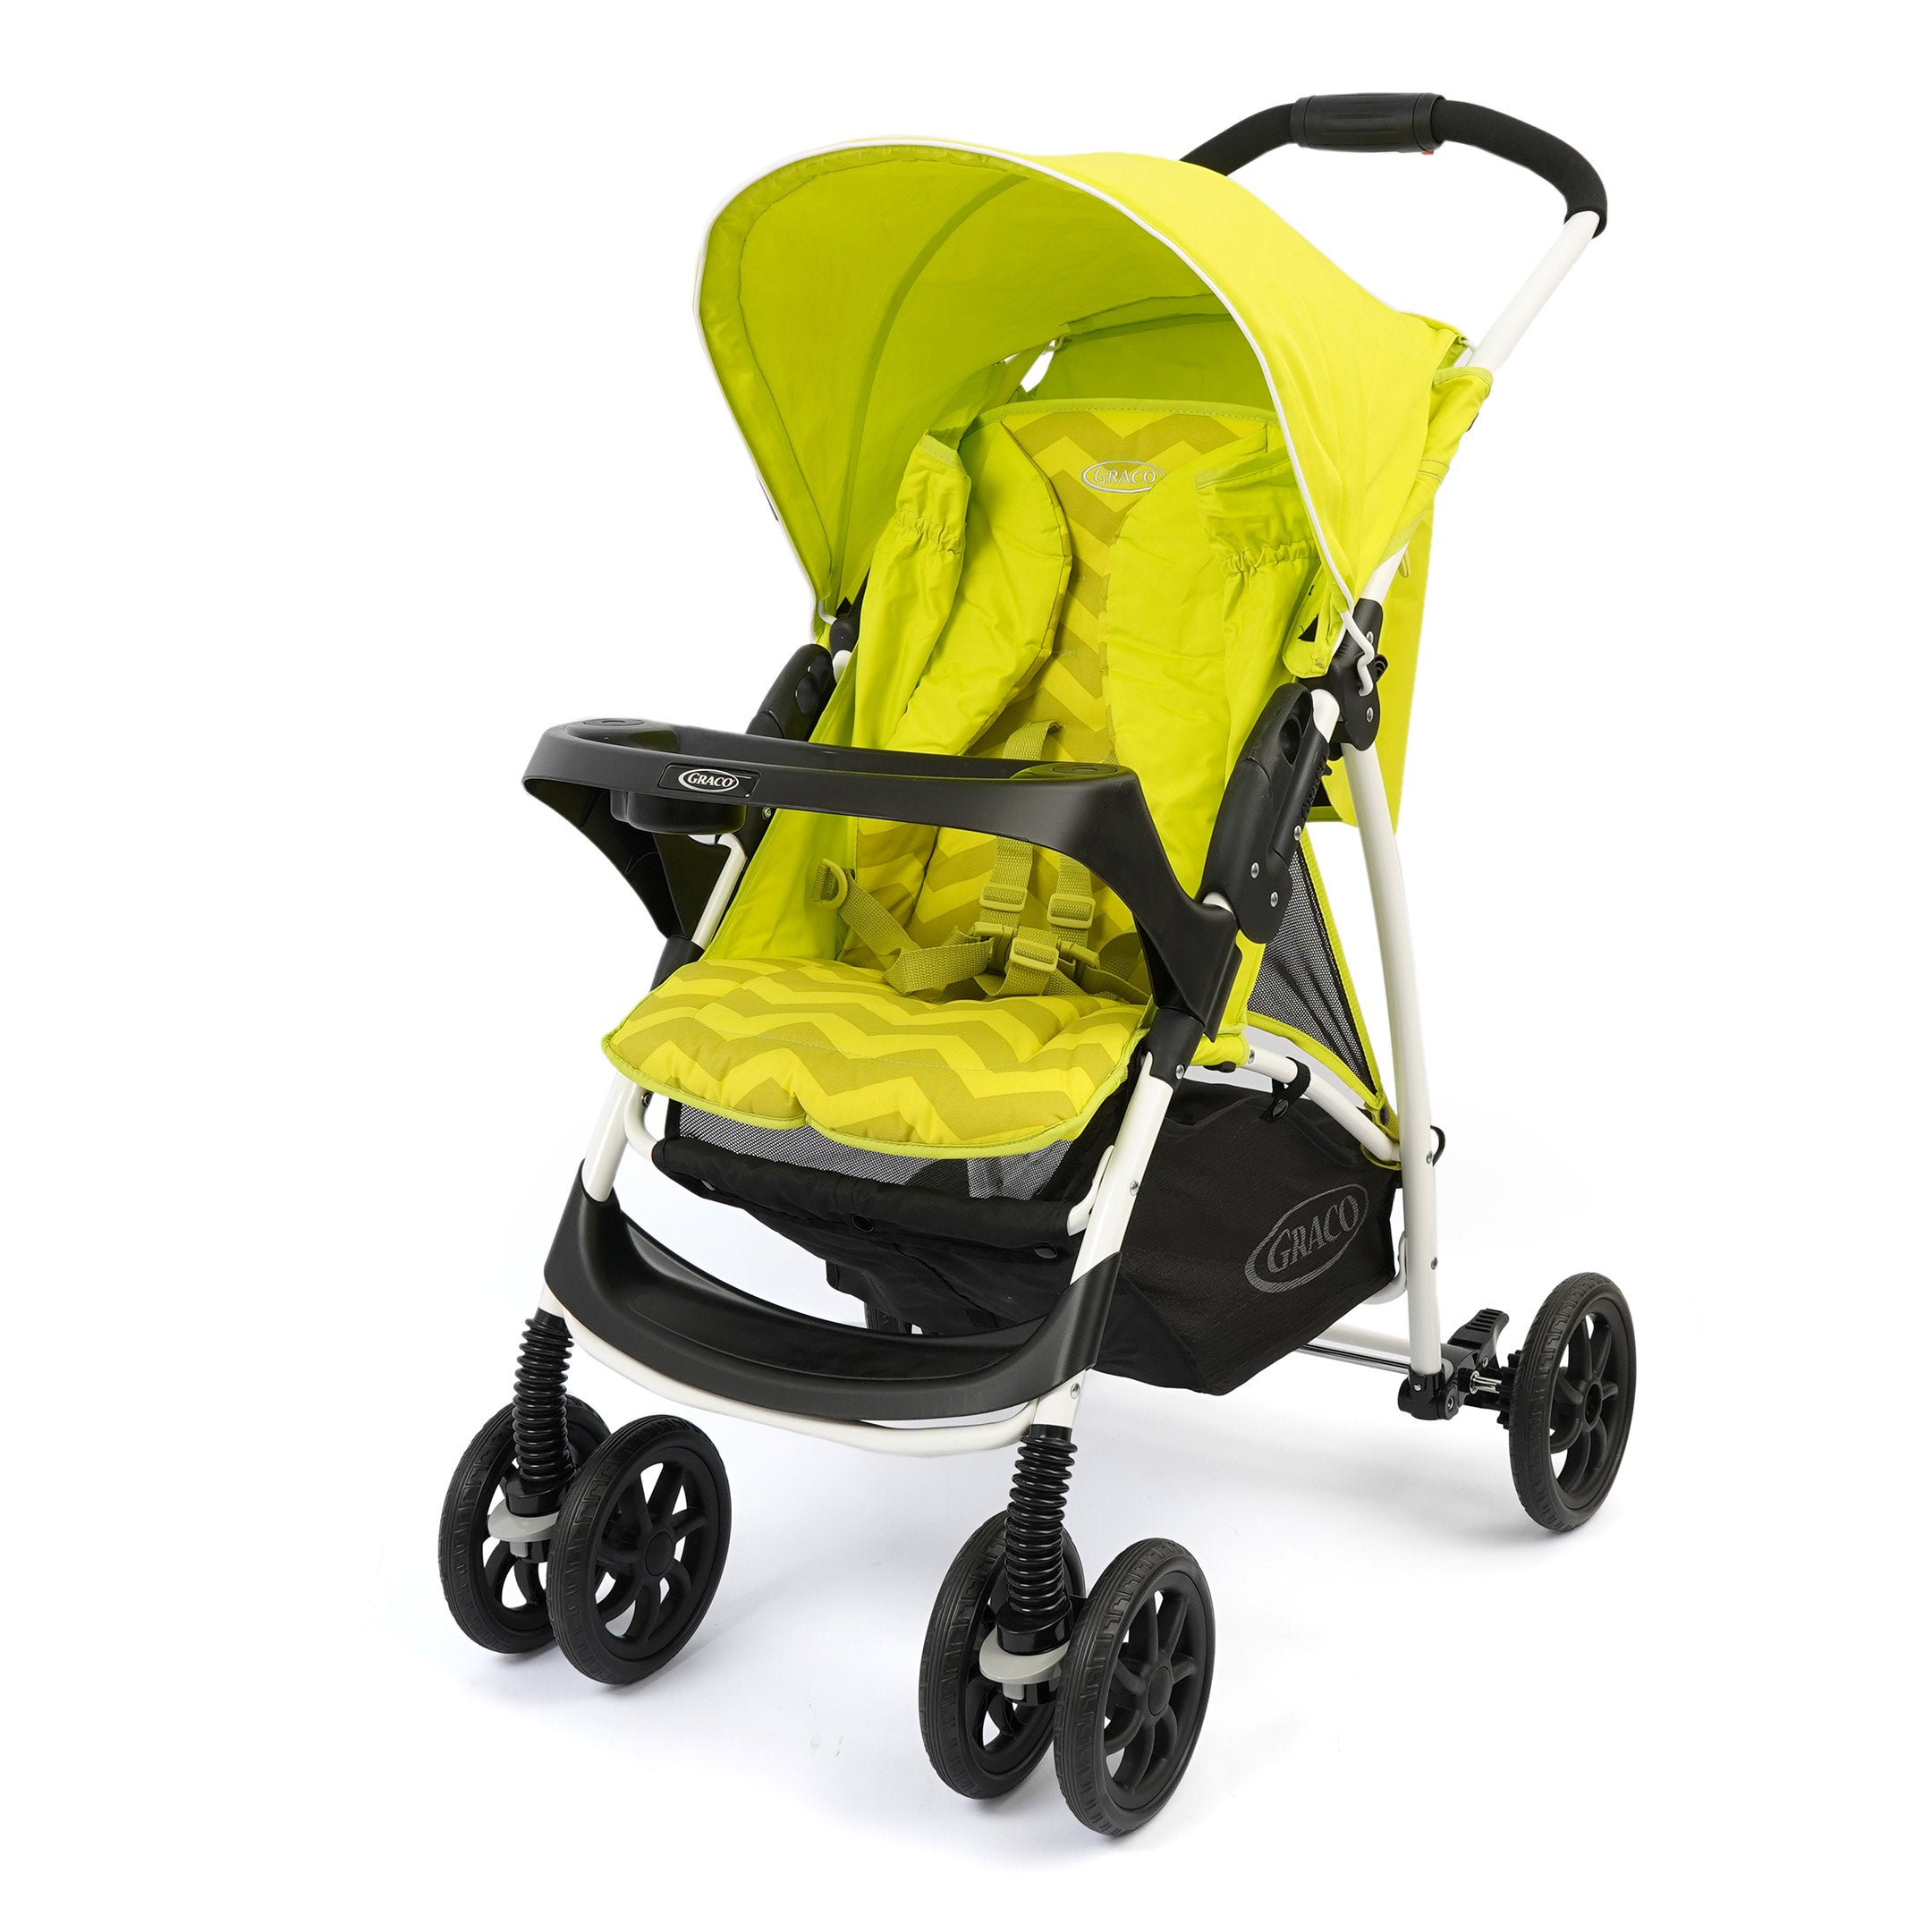 Graco Premium Baby Stroller